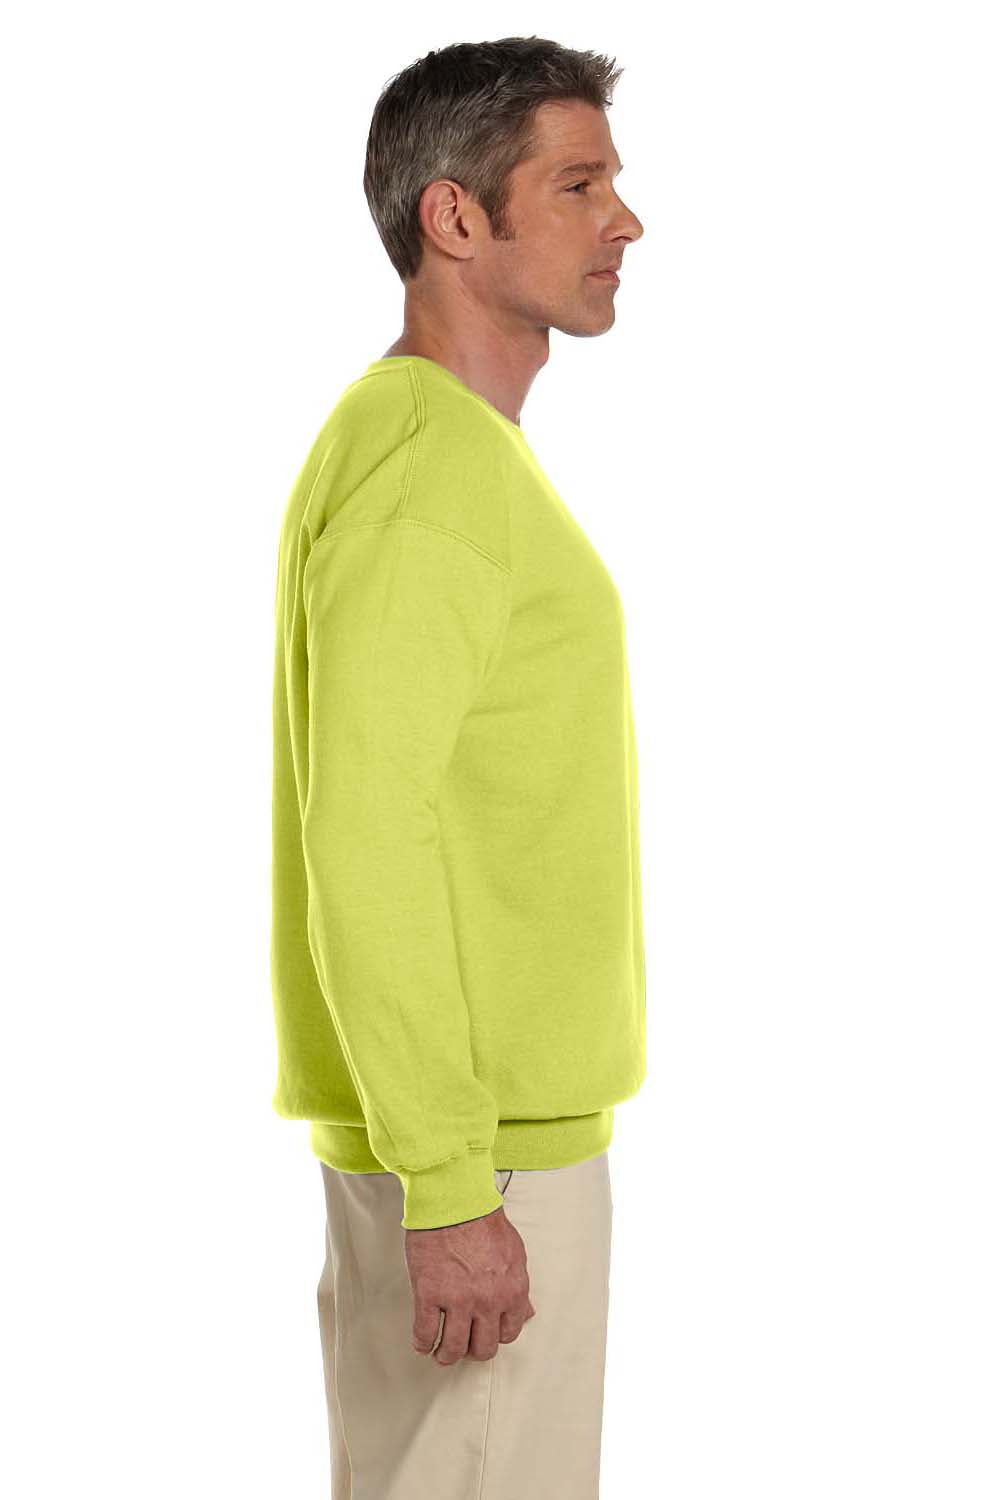 Jerzees 4662 Mens Super Sweats NuBlend Fleece Crewneck Sweatshirt Safety Green Side